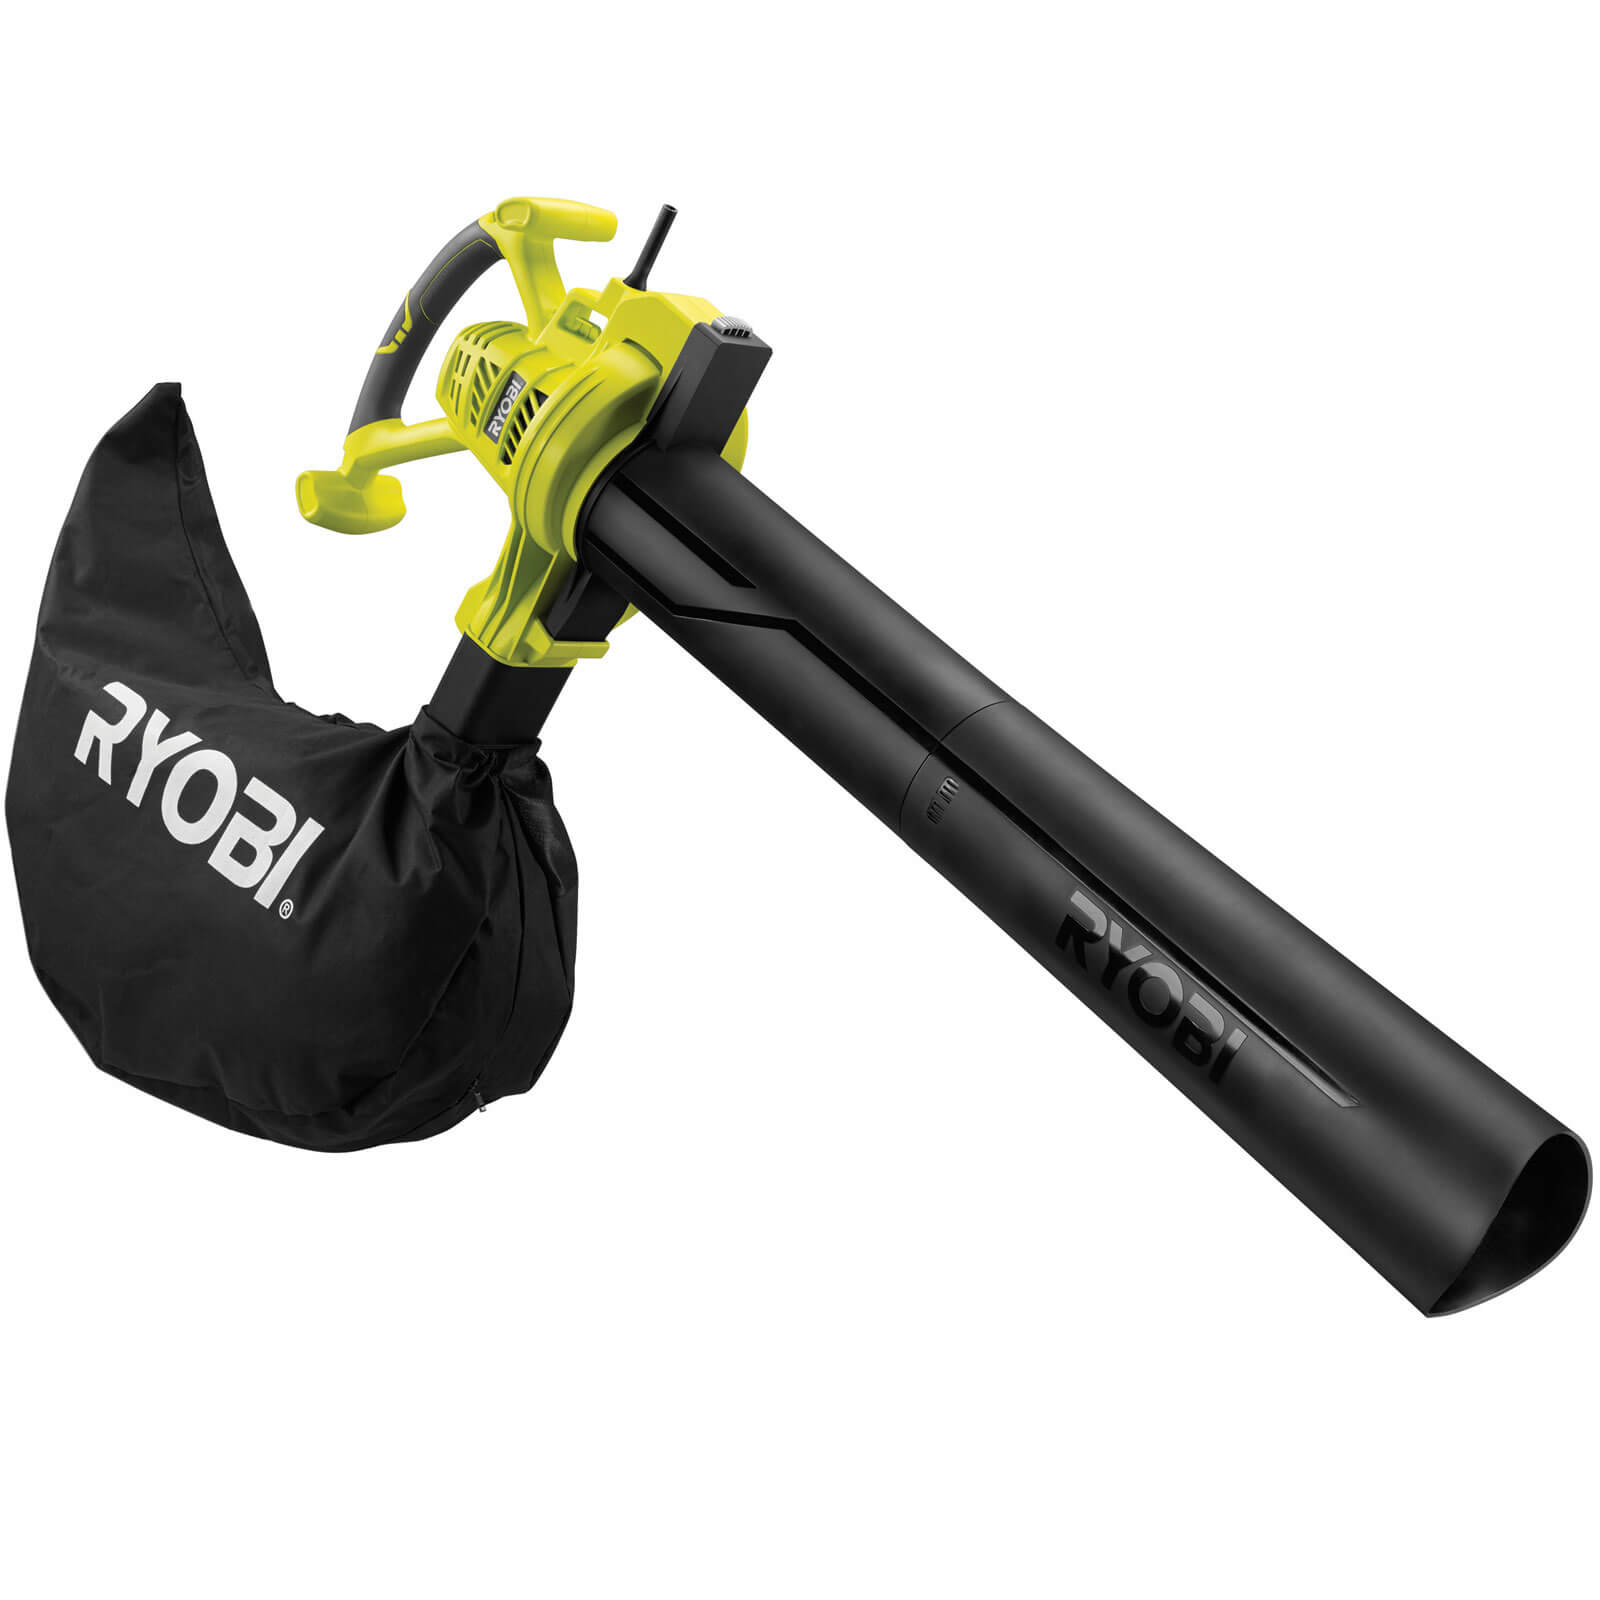 Ryobi Rbv3000csv Garden Vacuum And Leaf Blower